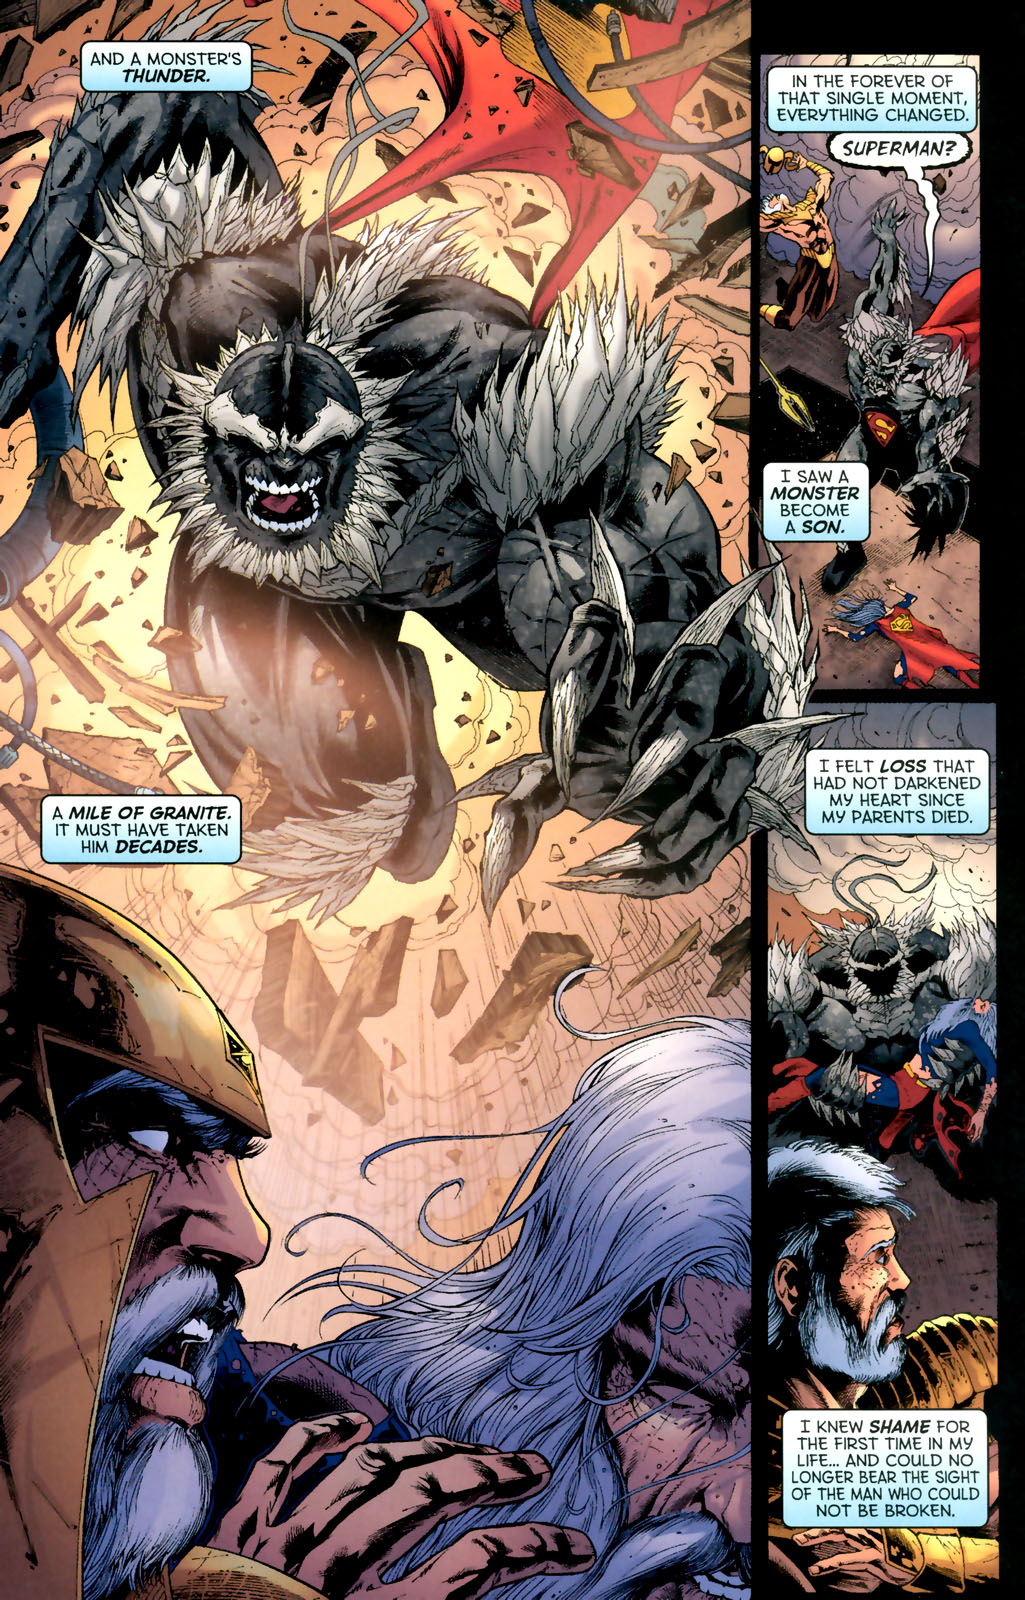 Cosmic Fear Garou vs New 52 Superman - Battles - Comic Vine